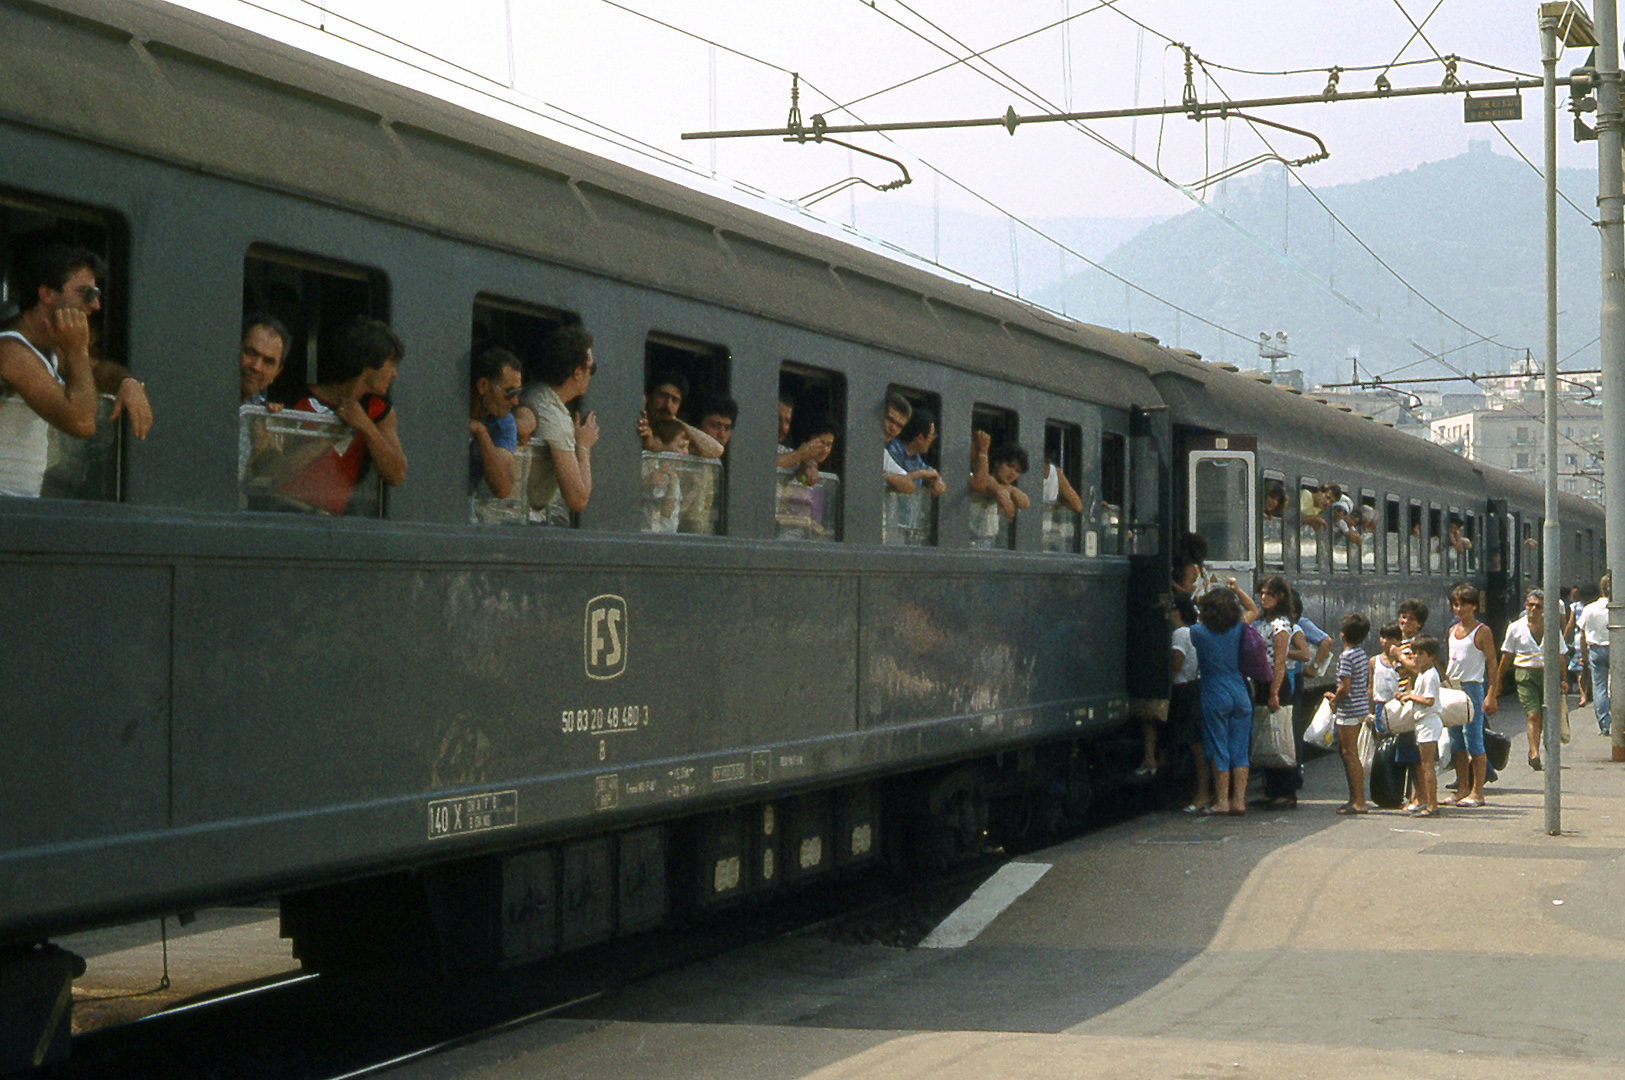 Station Salerno (Italië), Salerno Station (Italy)